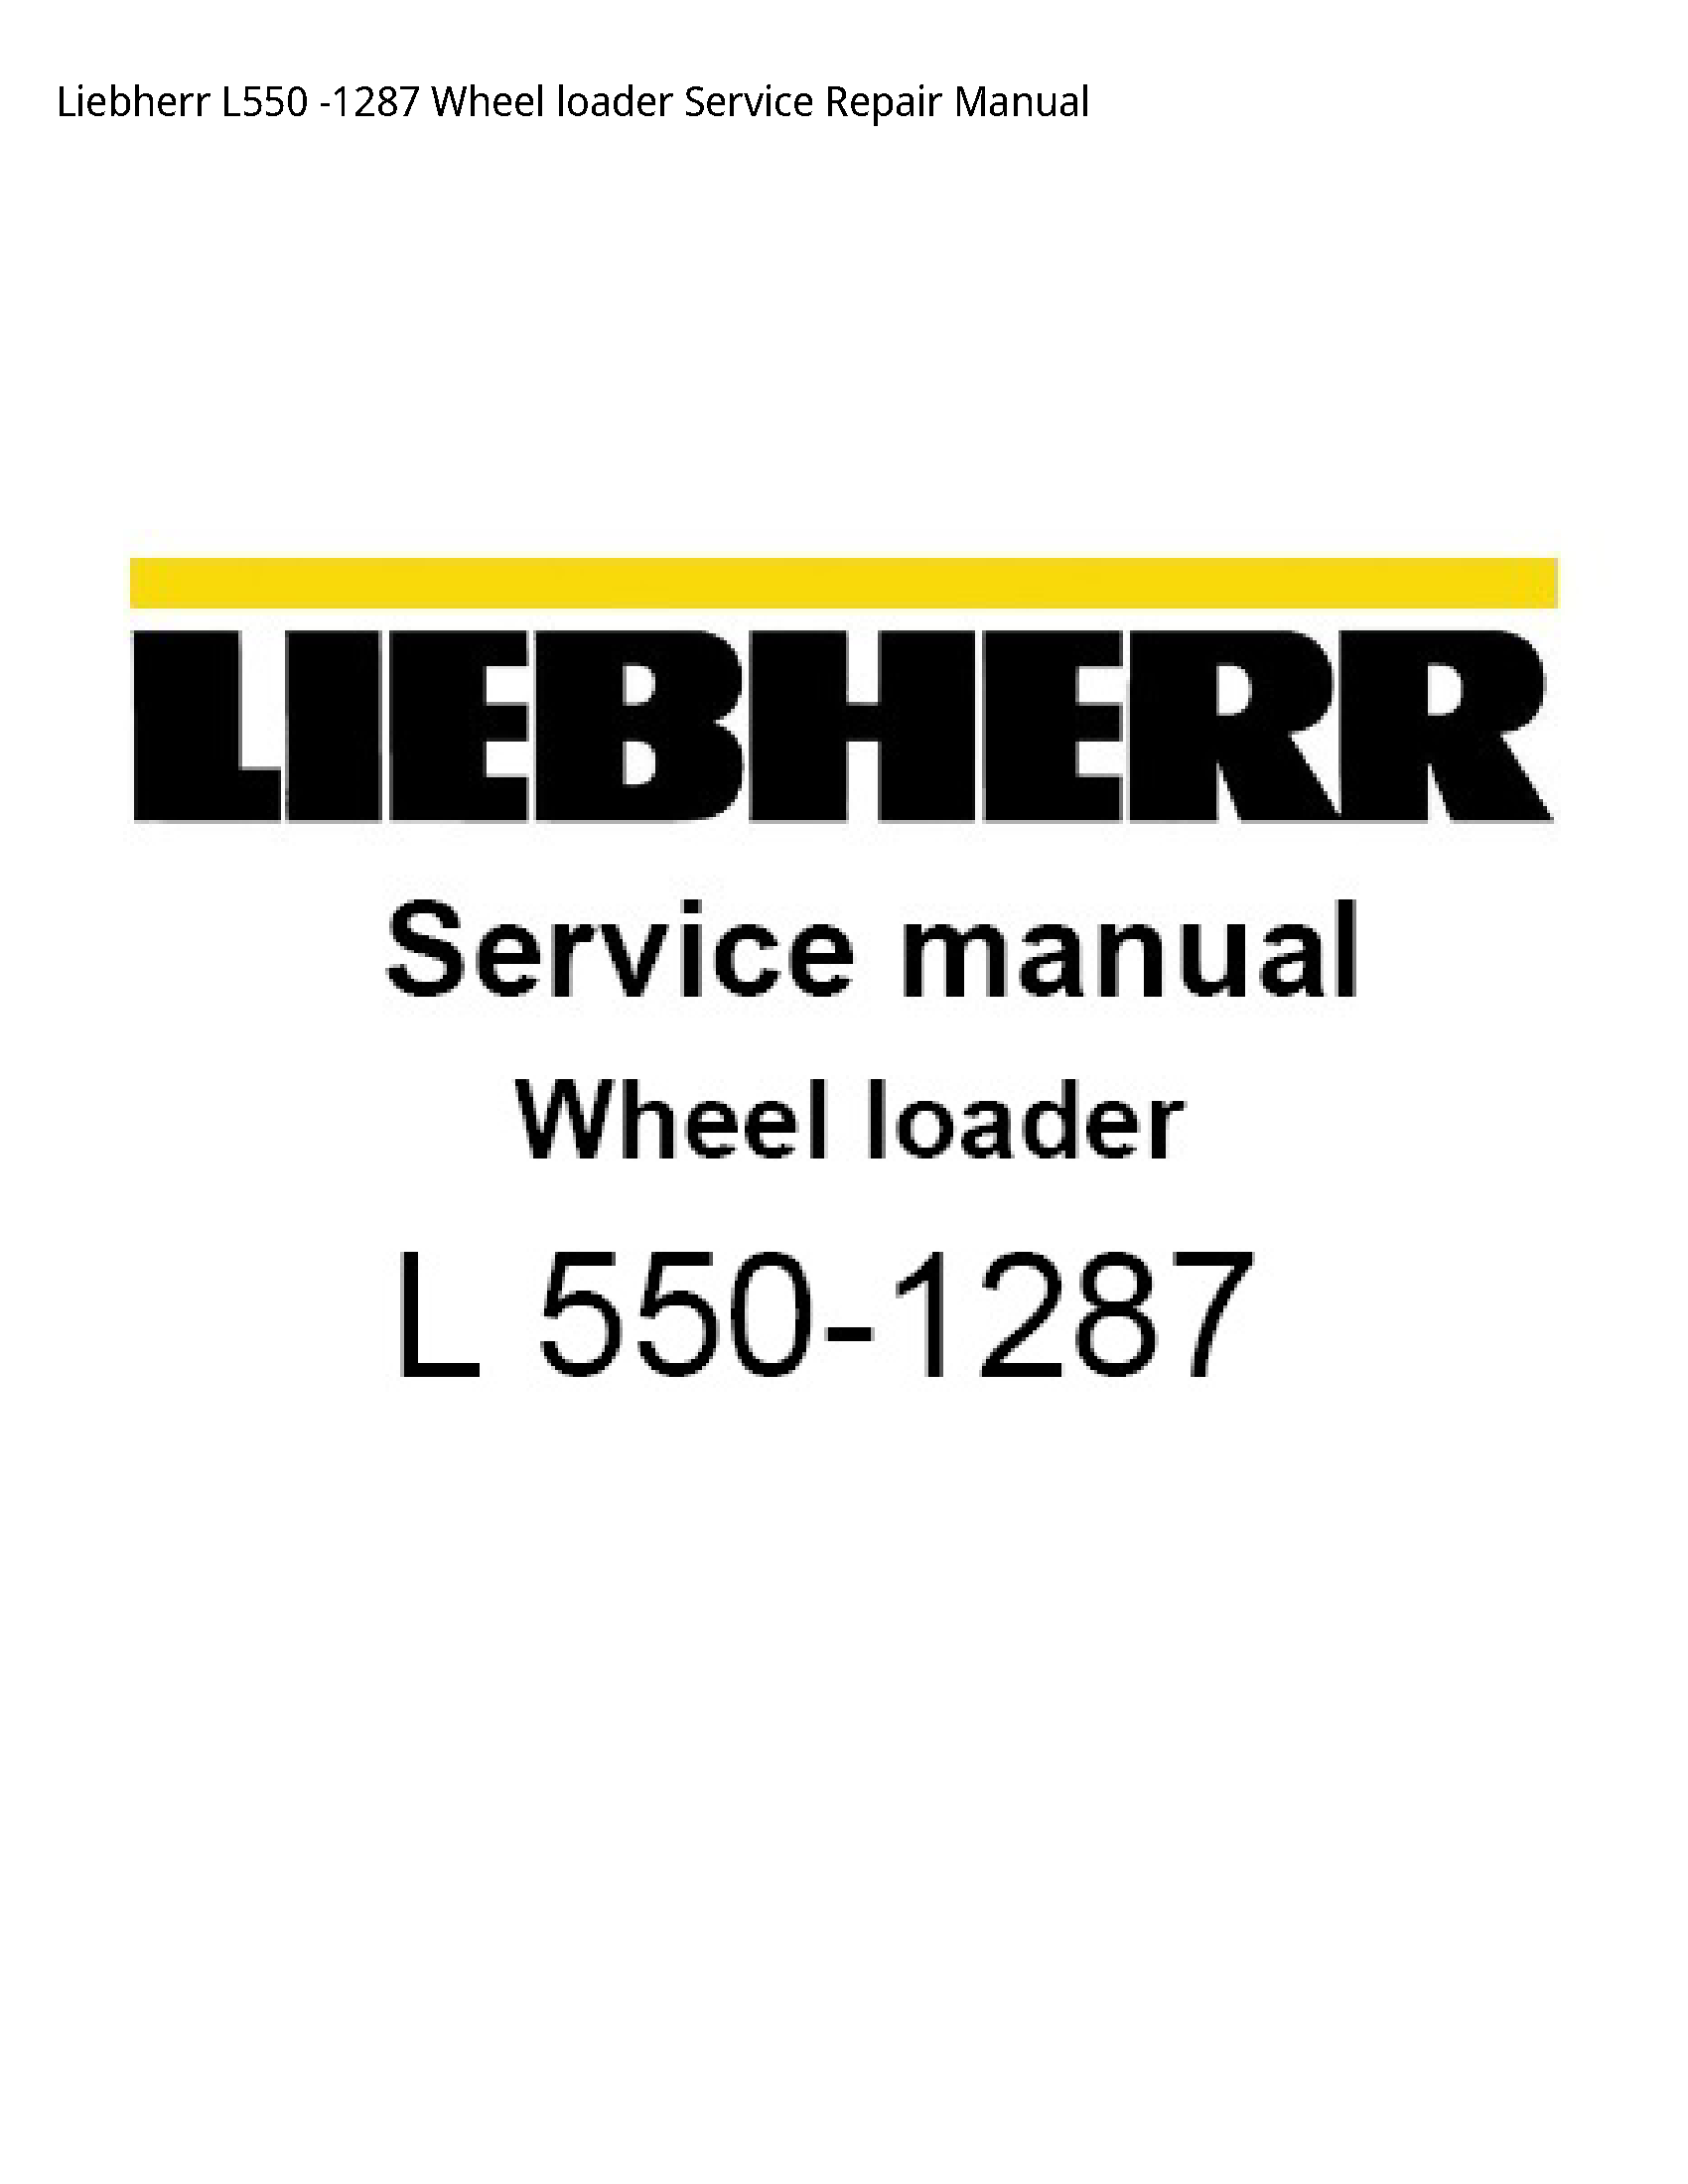 Liebherr L550 Wheel loader manual